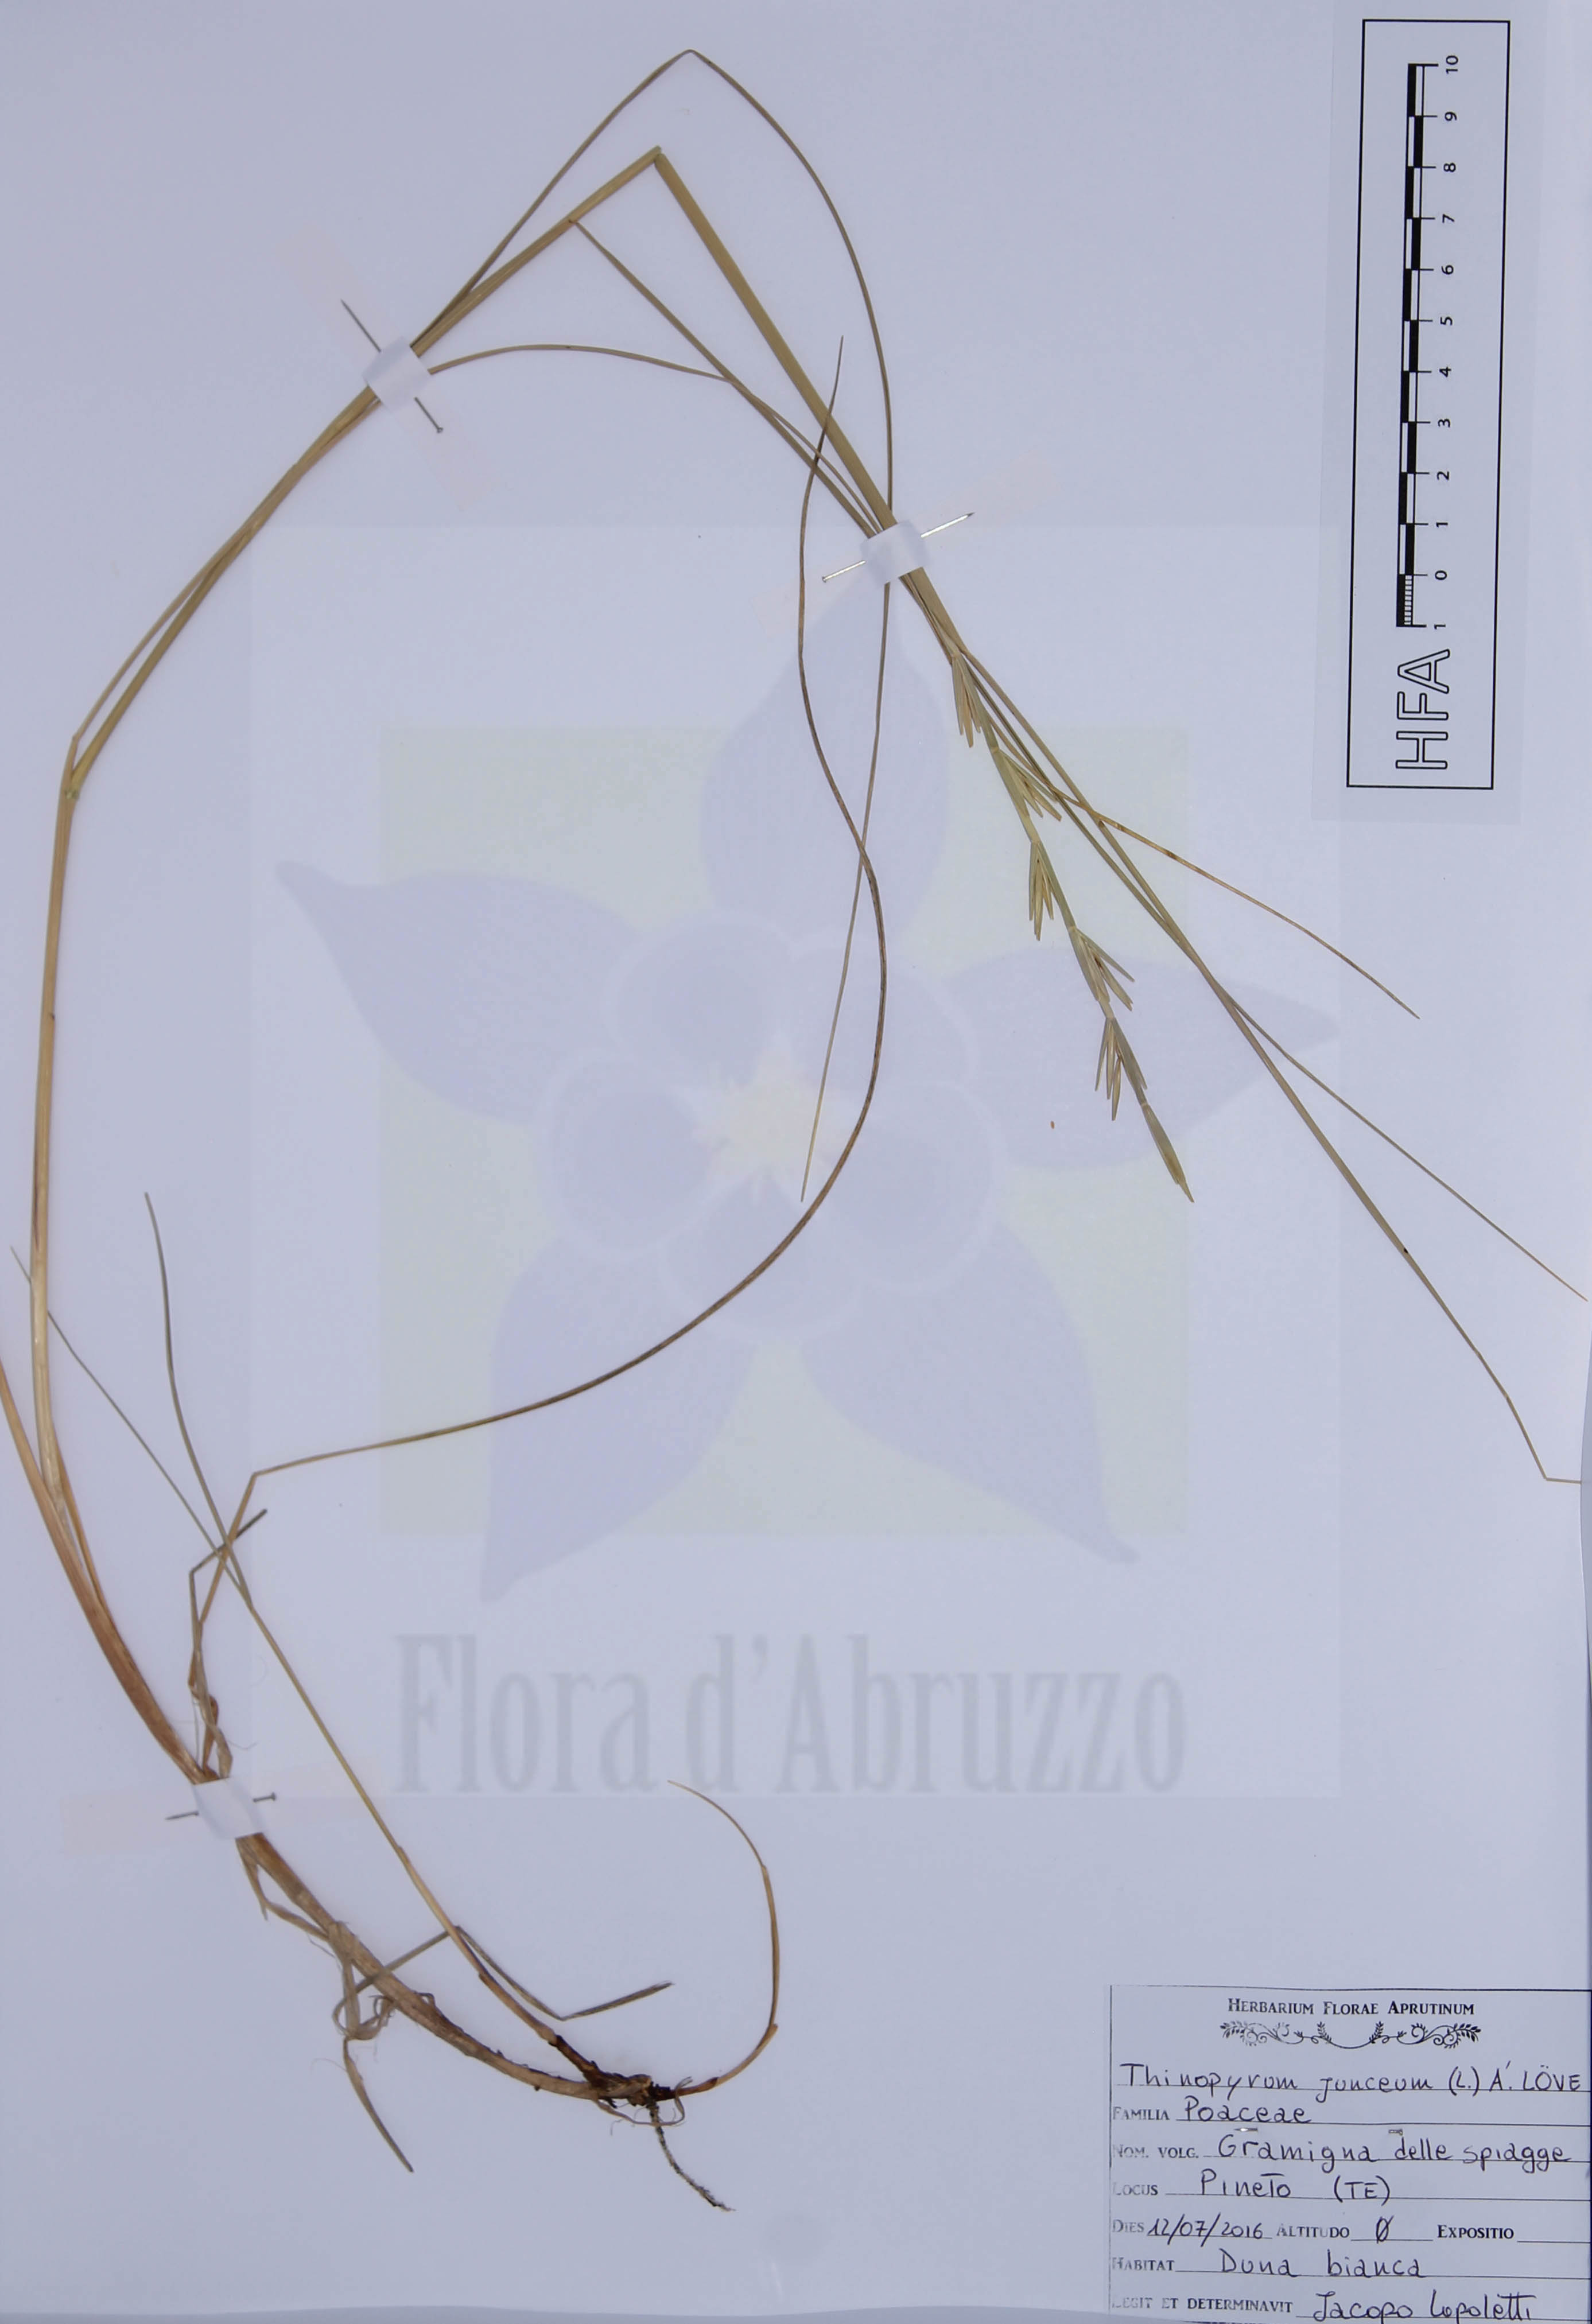 Thinopyrum junceum (L.) Á.Löve